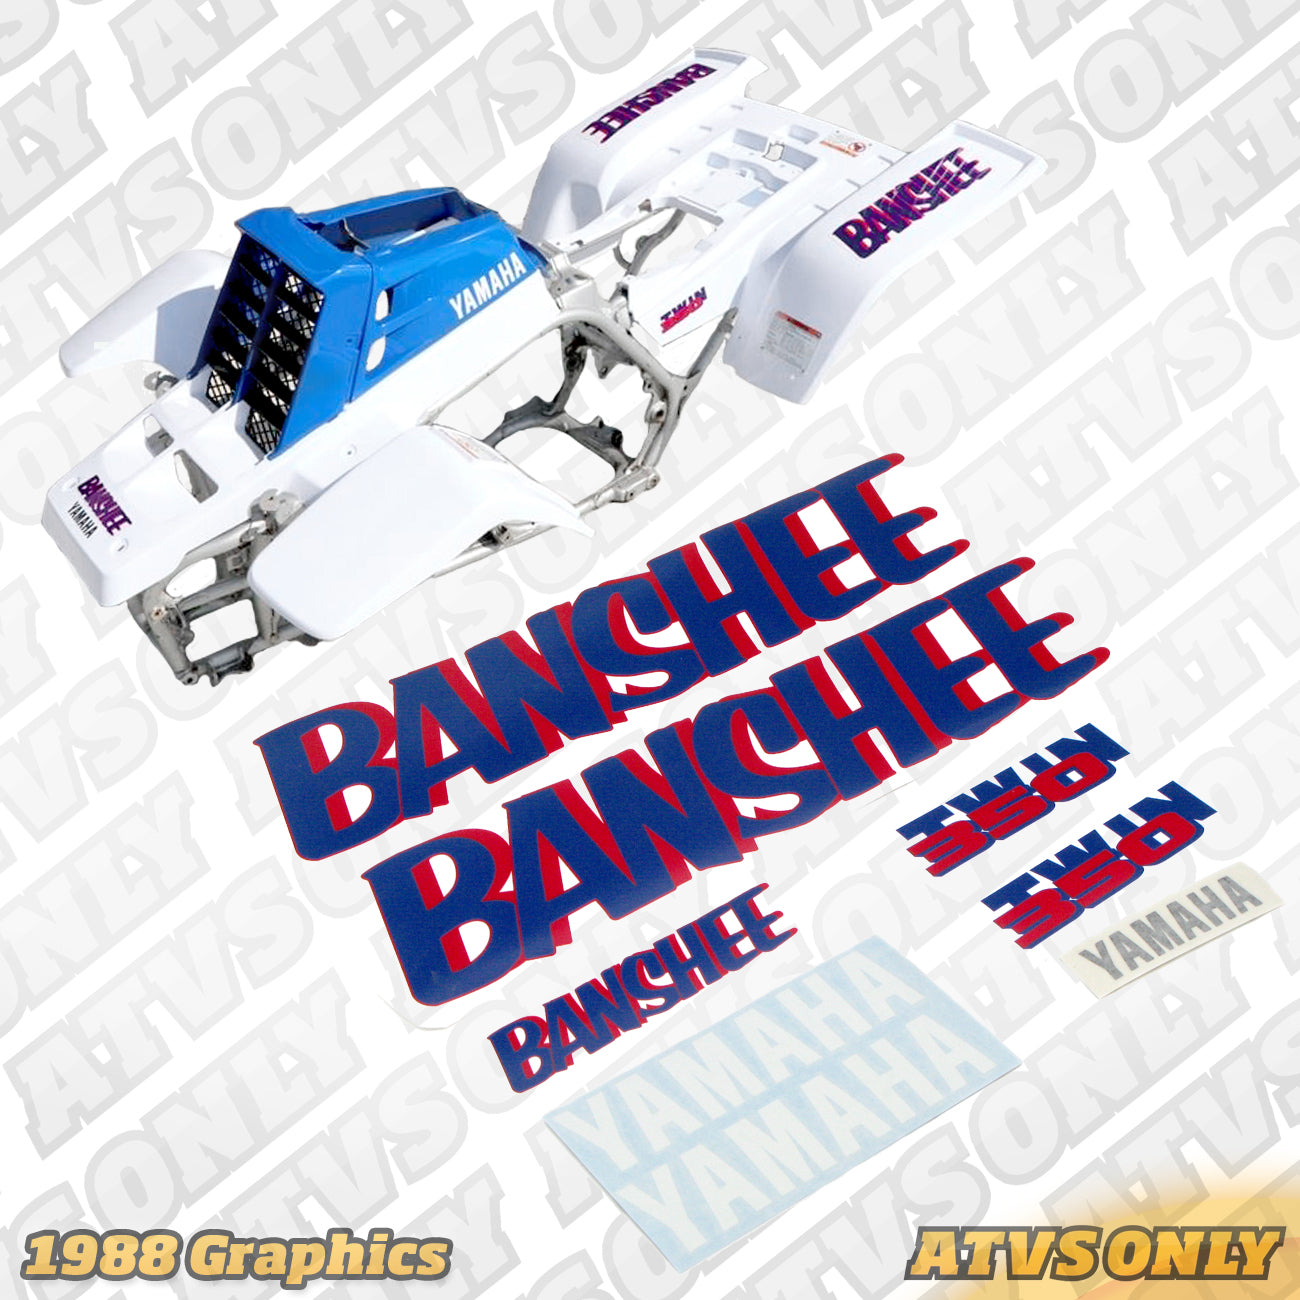 Graphics Kits for Yamaha Banshee